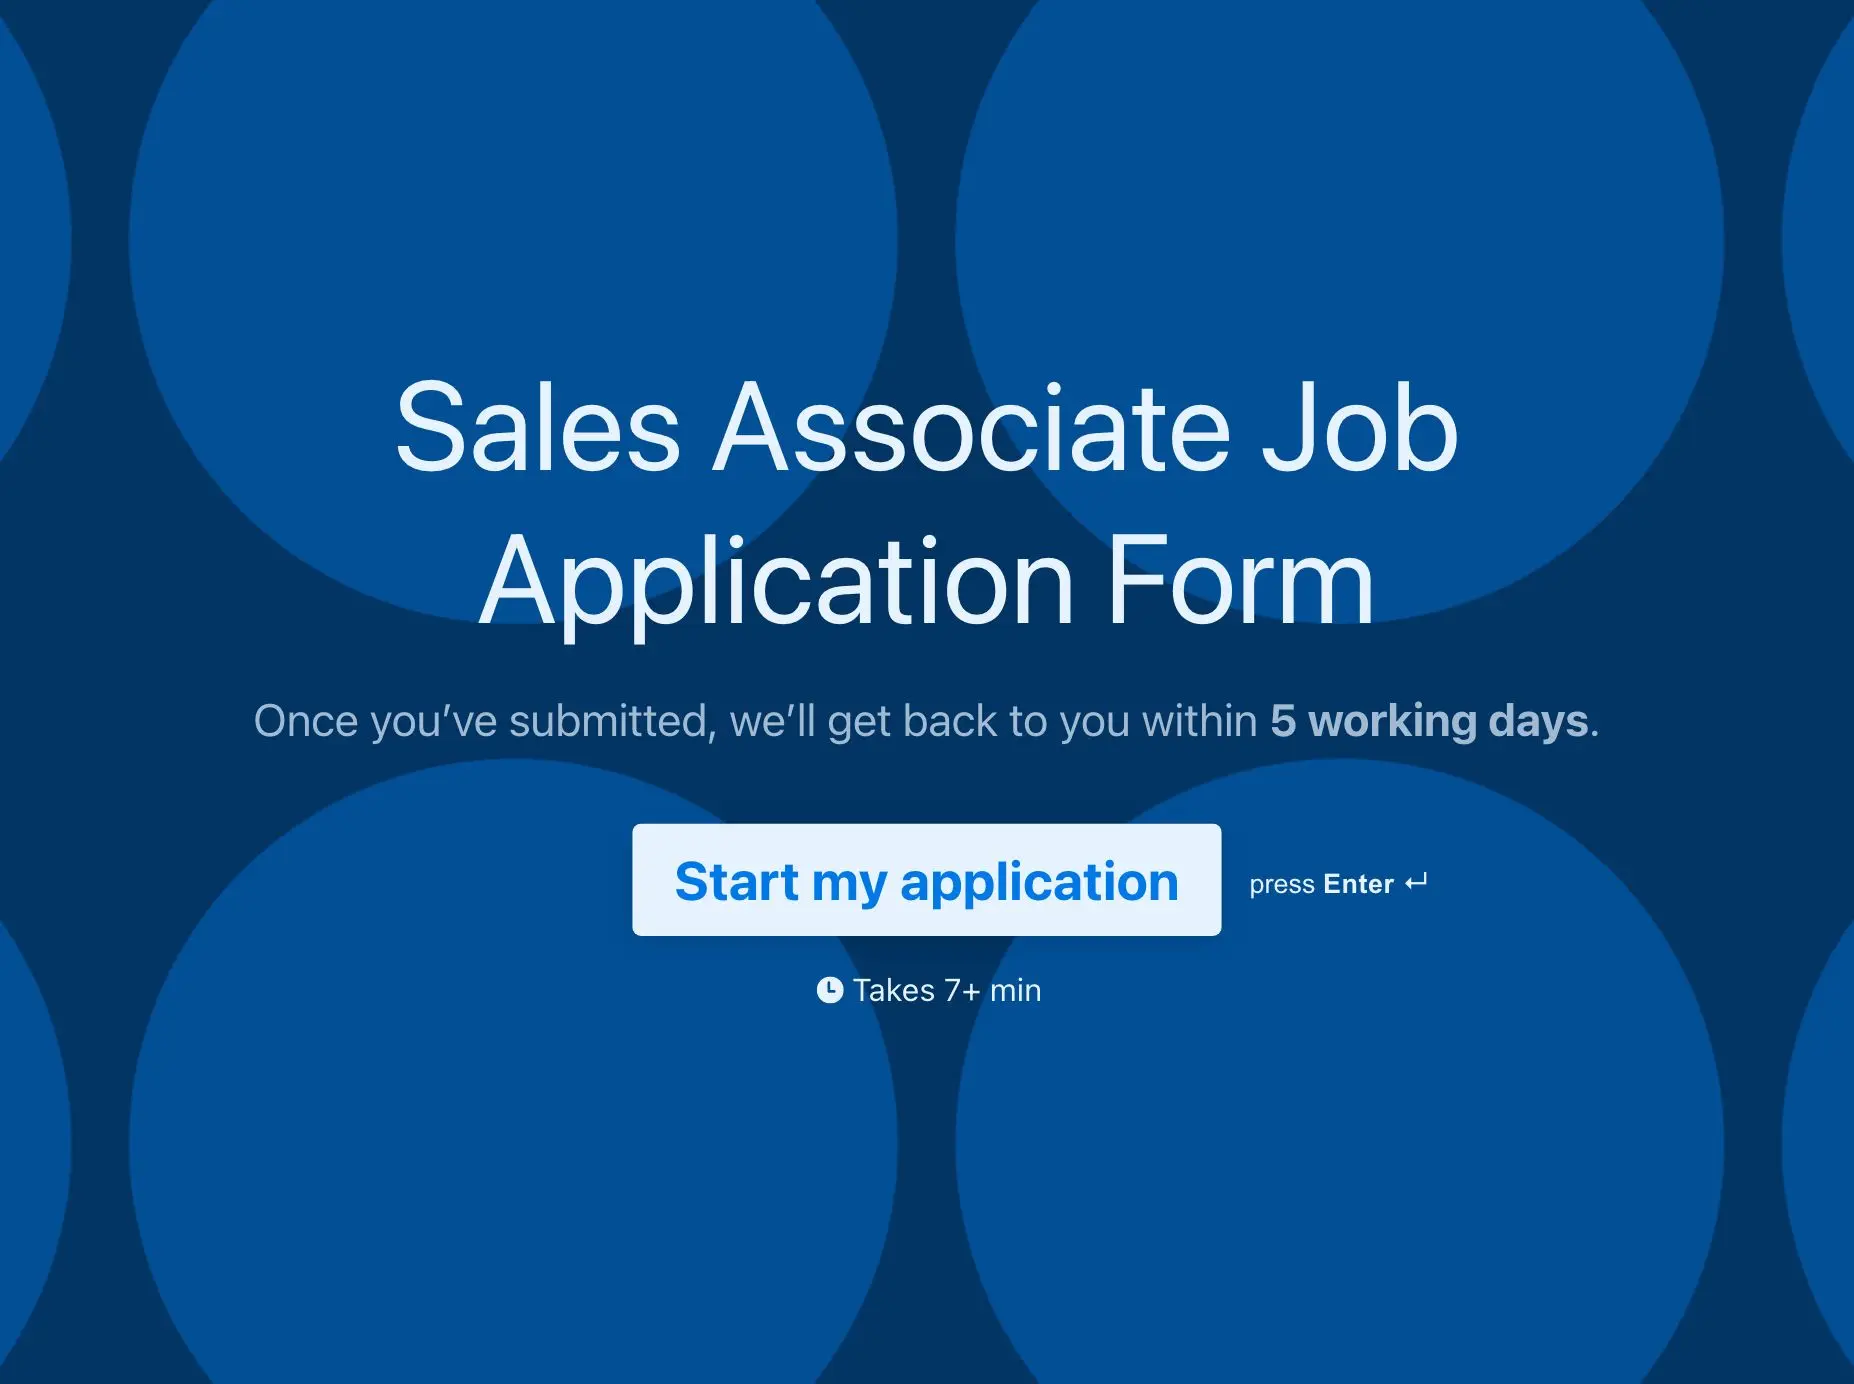 Sales Associate Job Application Form Template Hero